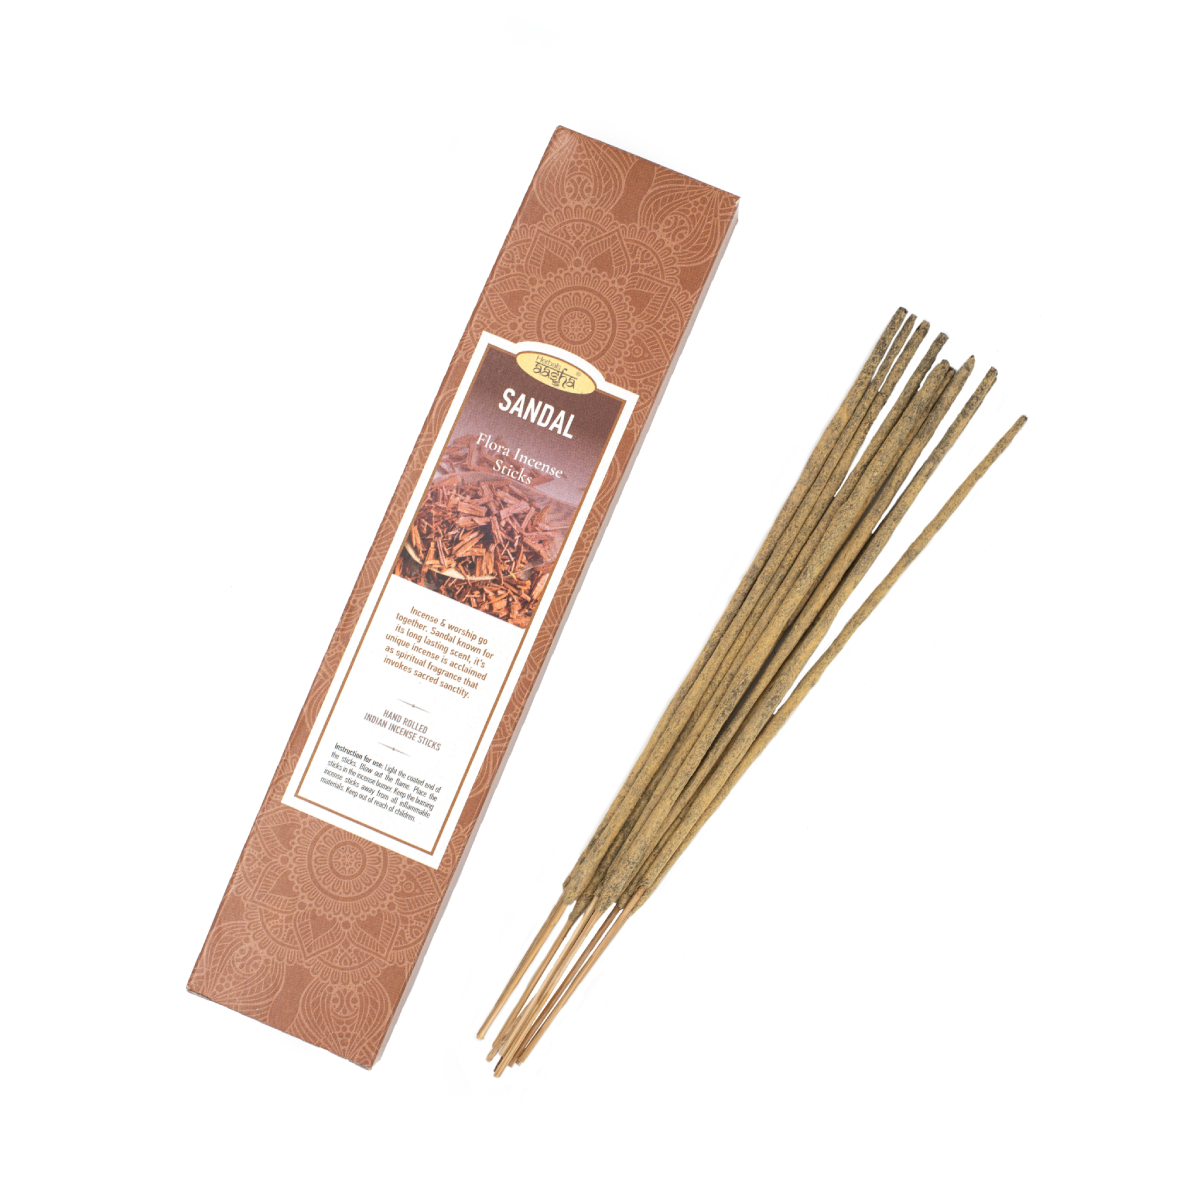 Ароматические палочки Aasha Herbals Сандал (Sandal), 10 шт rio палочки для канареек с мёдом и полезными семенами 80 гр